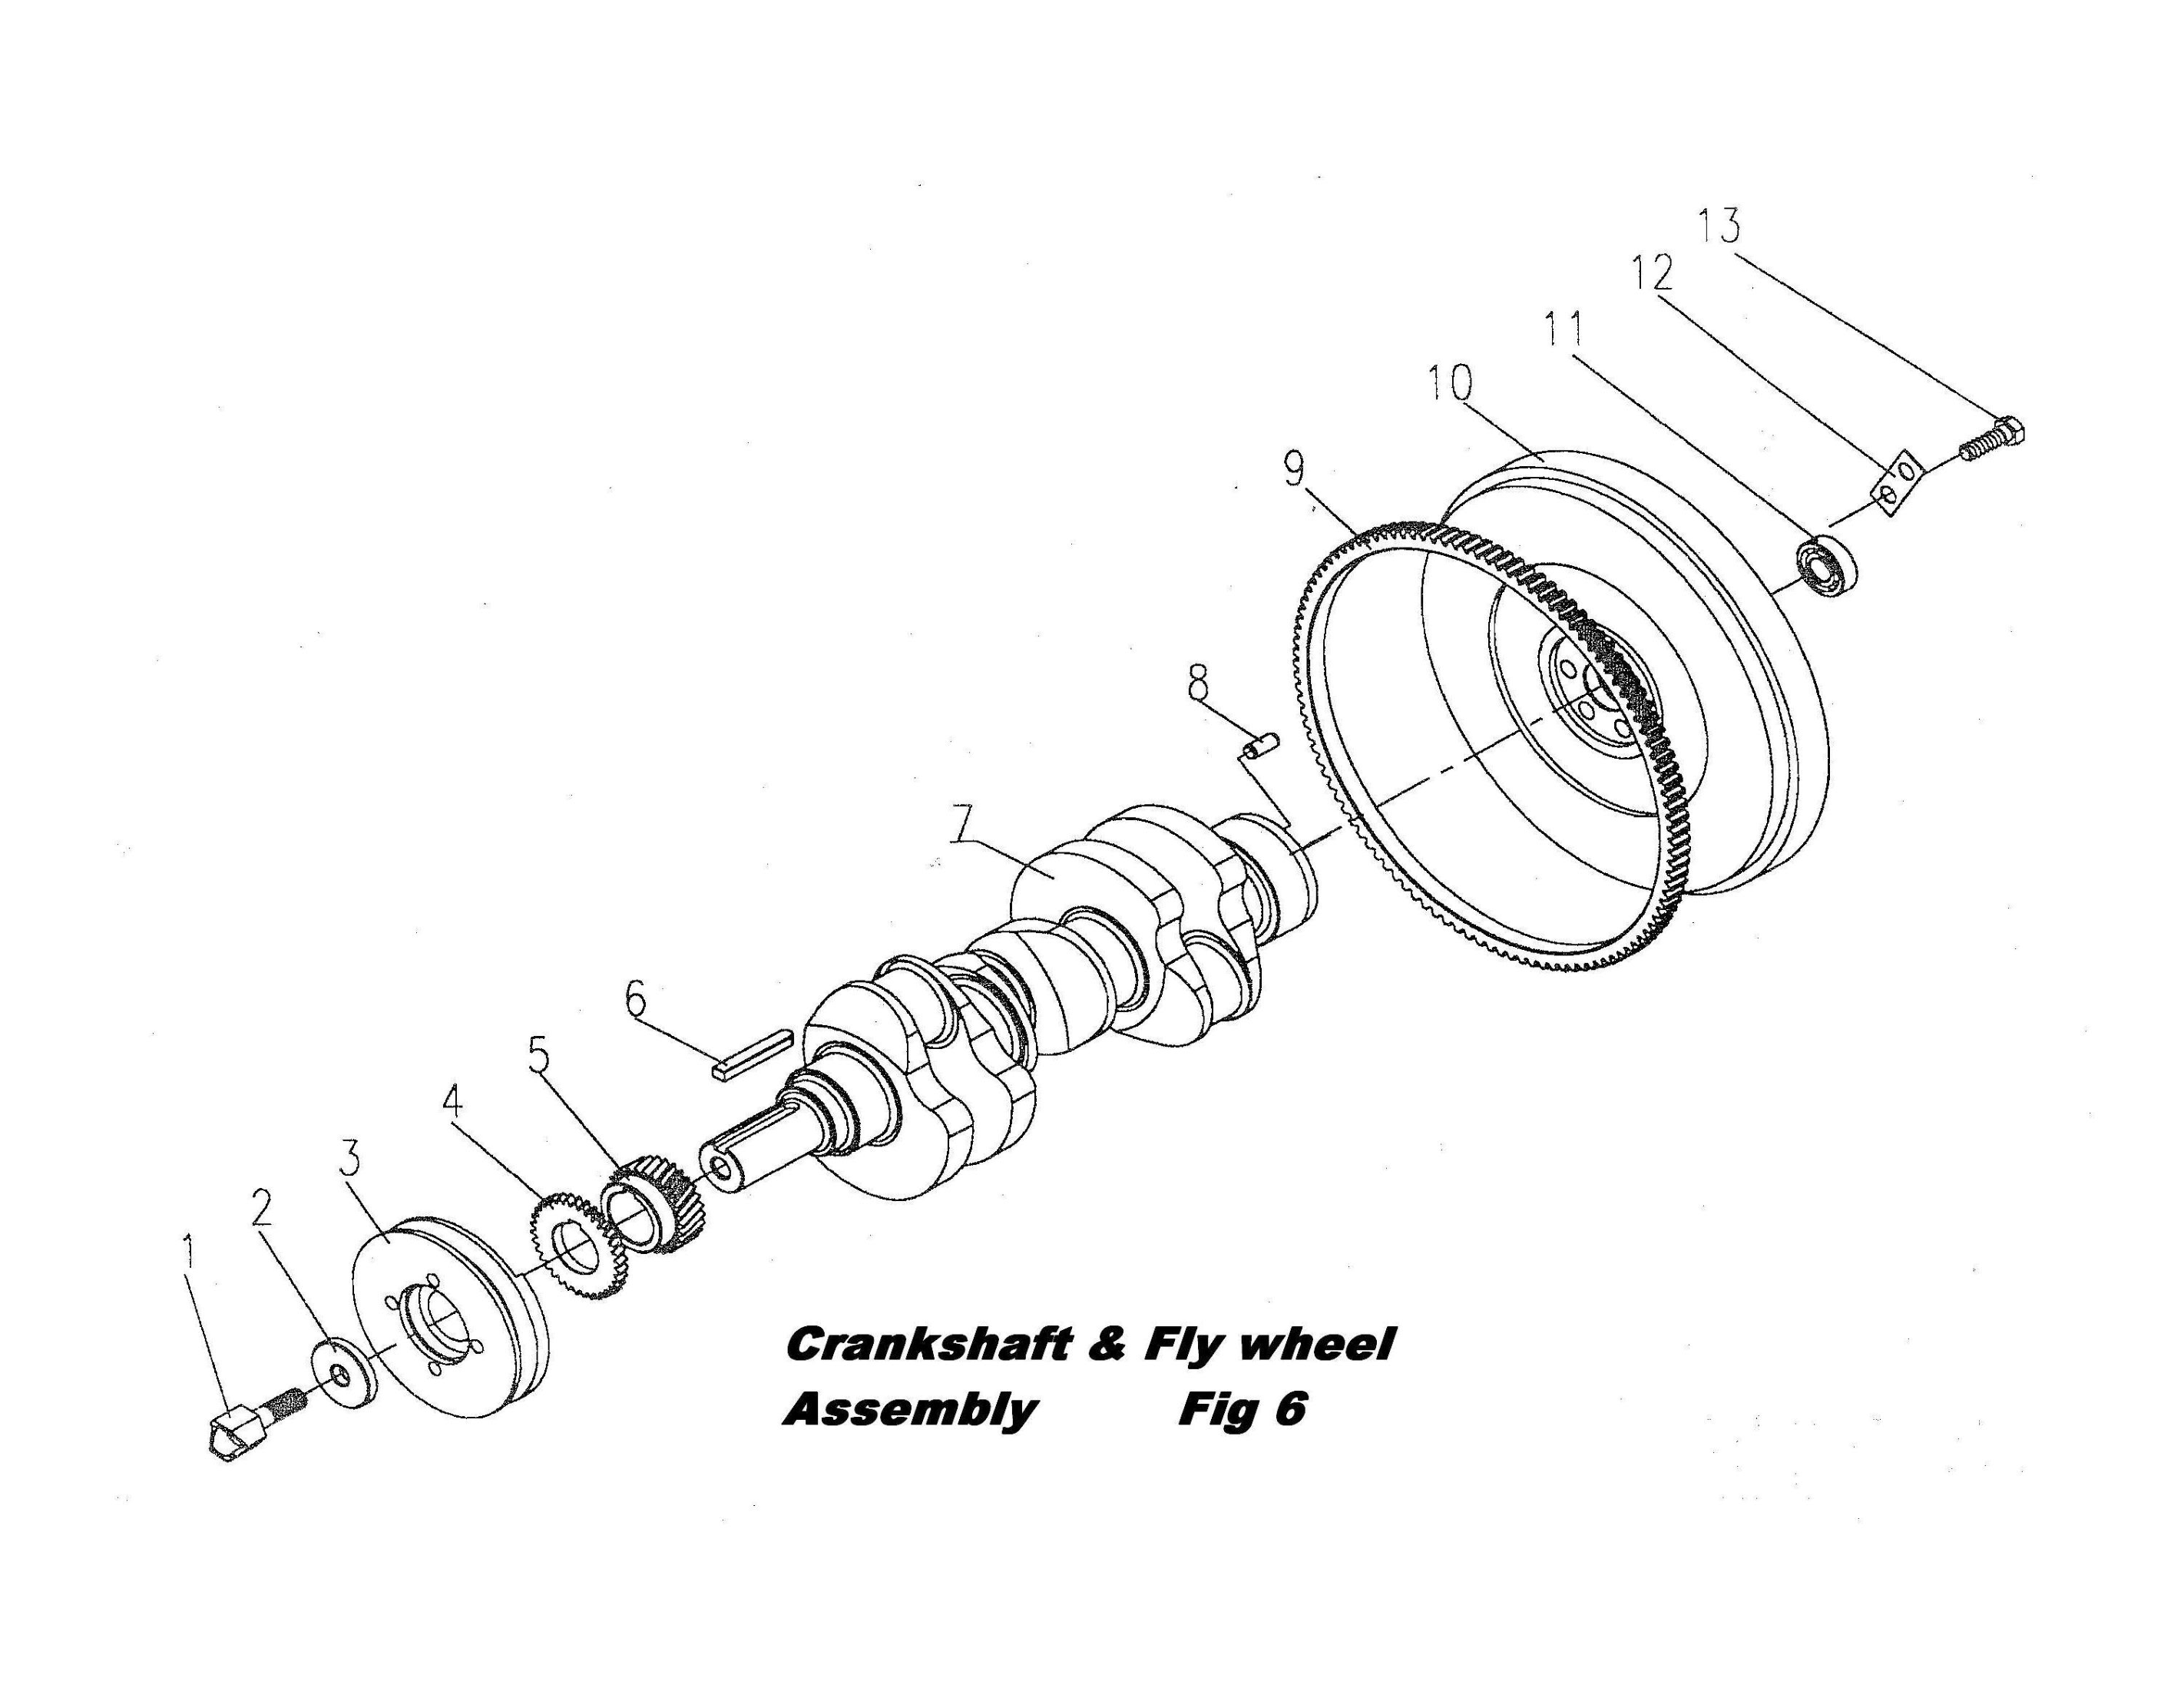 Crankshart & Fly Wheel Assembly